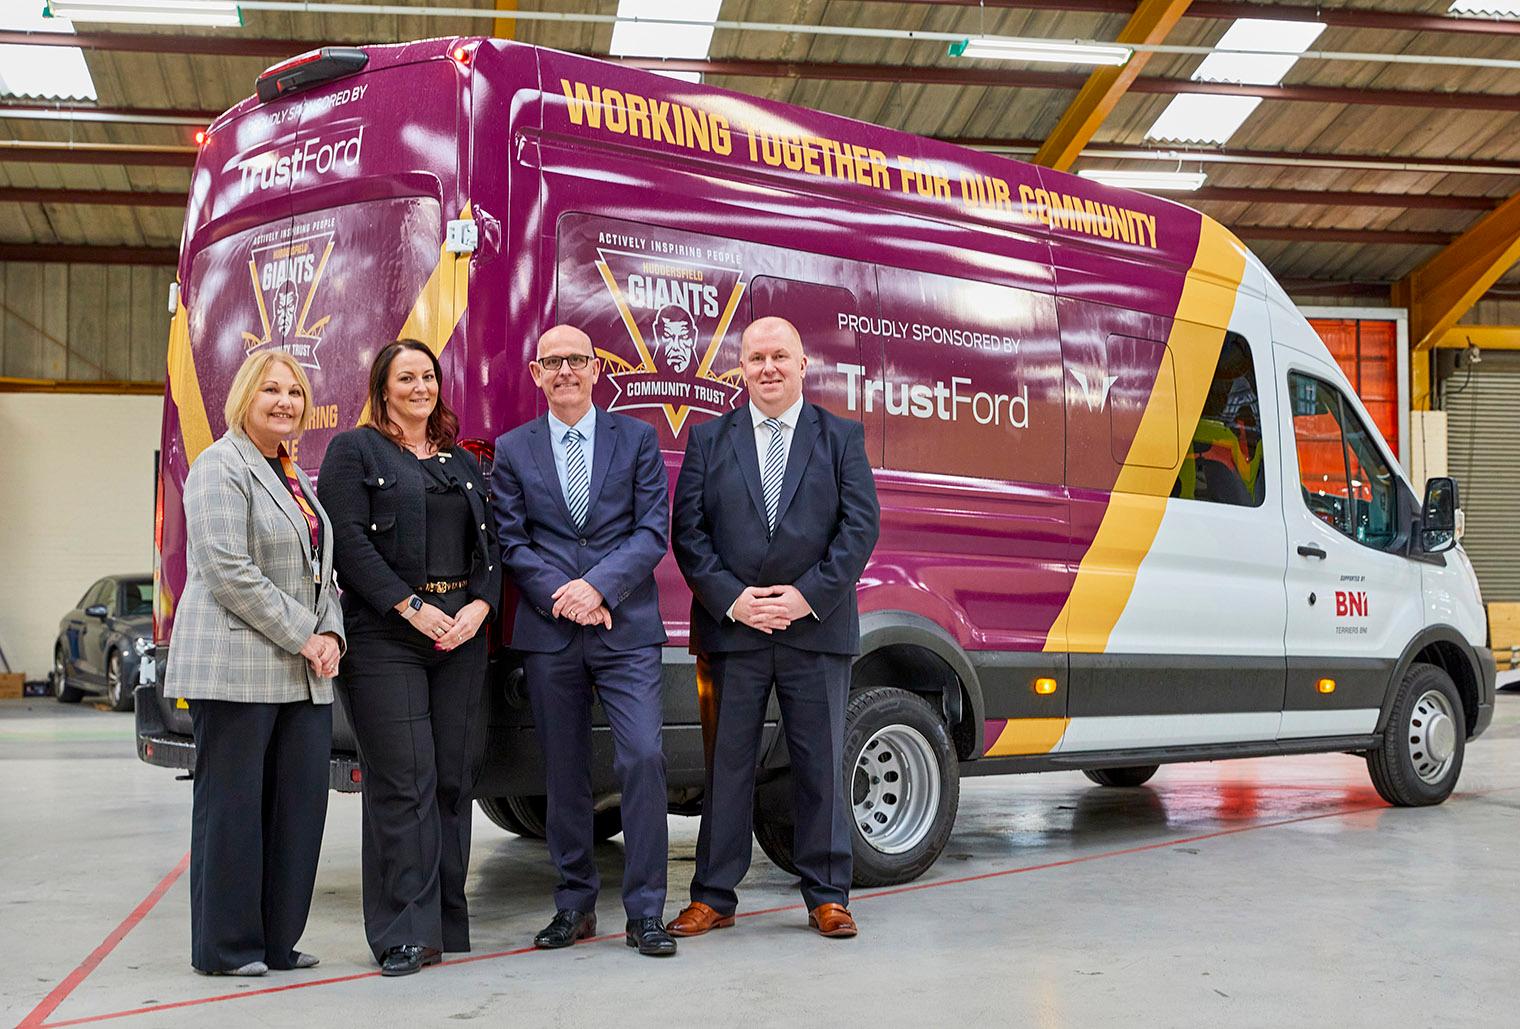 TrustFord donate Minibus to Huddersfield Giants Community Trust